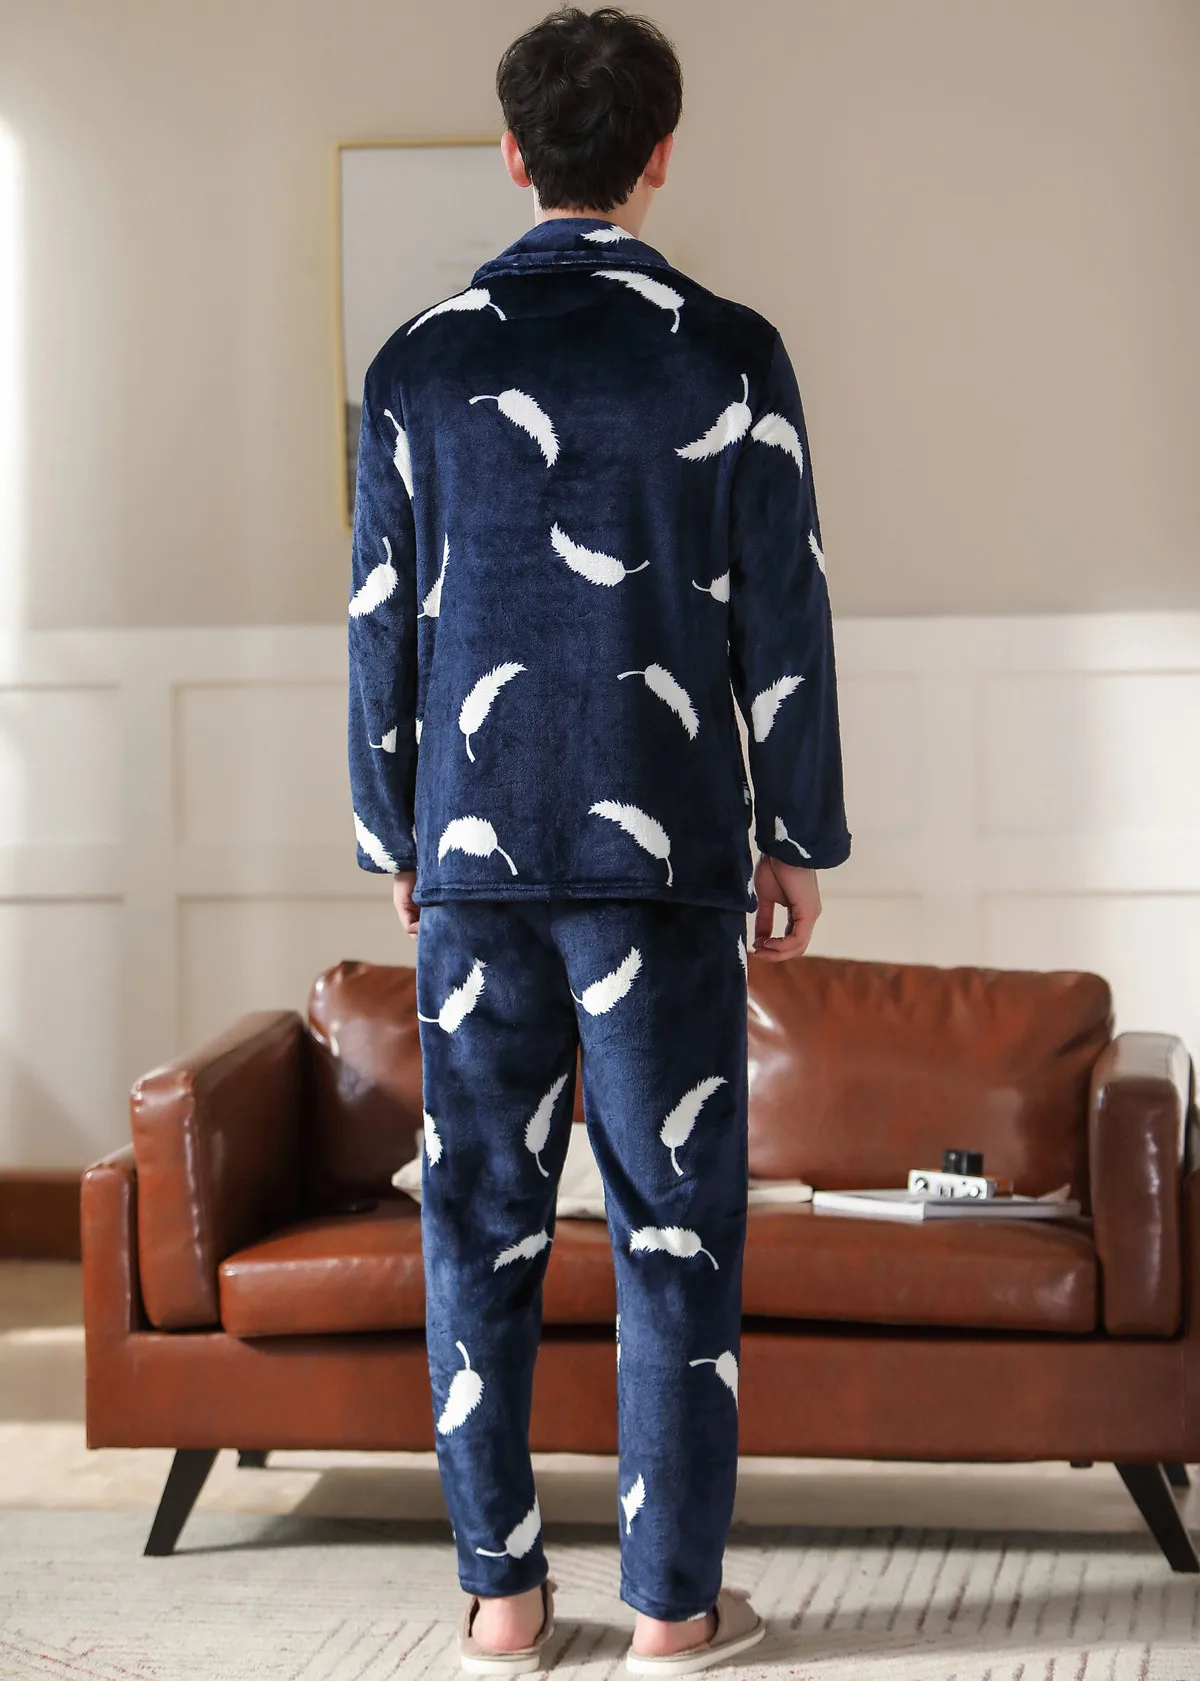 silk pajamas Plus Size Flannel Pyjamas Men's Thicken Warm Soft Sleepwear Pijamas Hombre Men Long Sleeve Casual Homewear Pajamas Sets For Male mens designer pjs